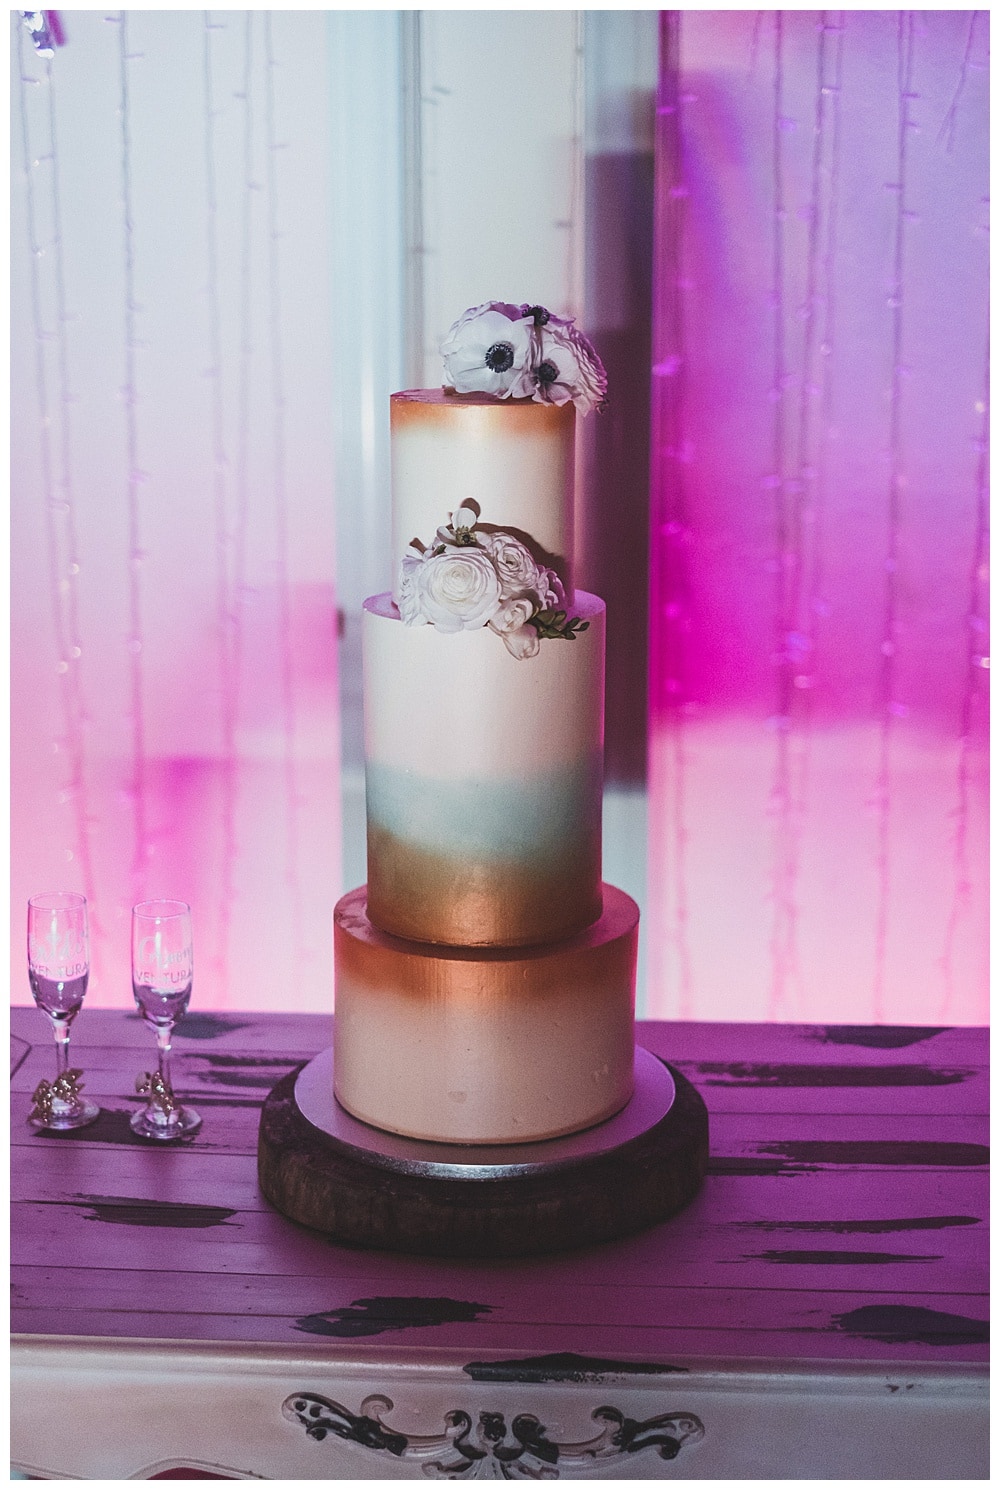 wedding cake by Migalha doce for elegant wedding in Quinta Vintage #weddingcake #migalhadoce #elegantcake #weddingtable #weddingdecoration #bohowedding #intimatewedding #sintrawedding #rainywedding #quintamyvintagewedding